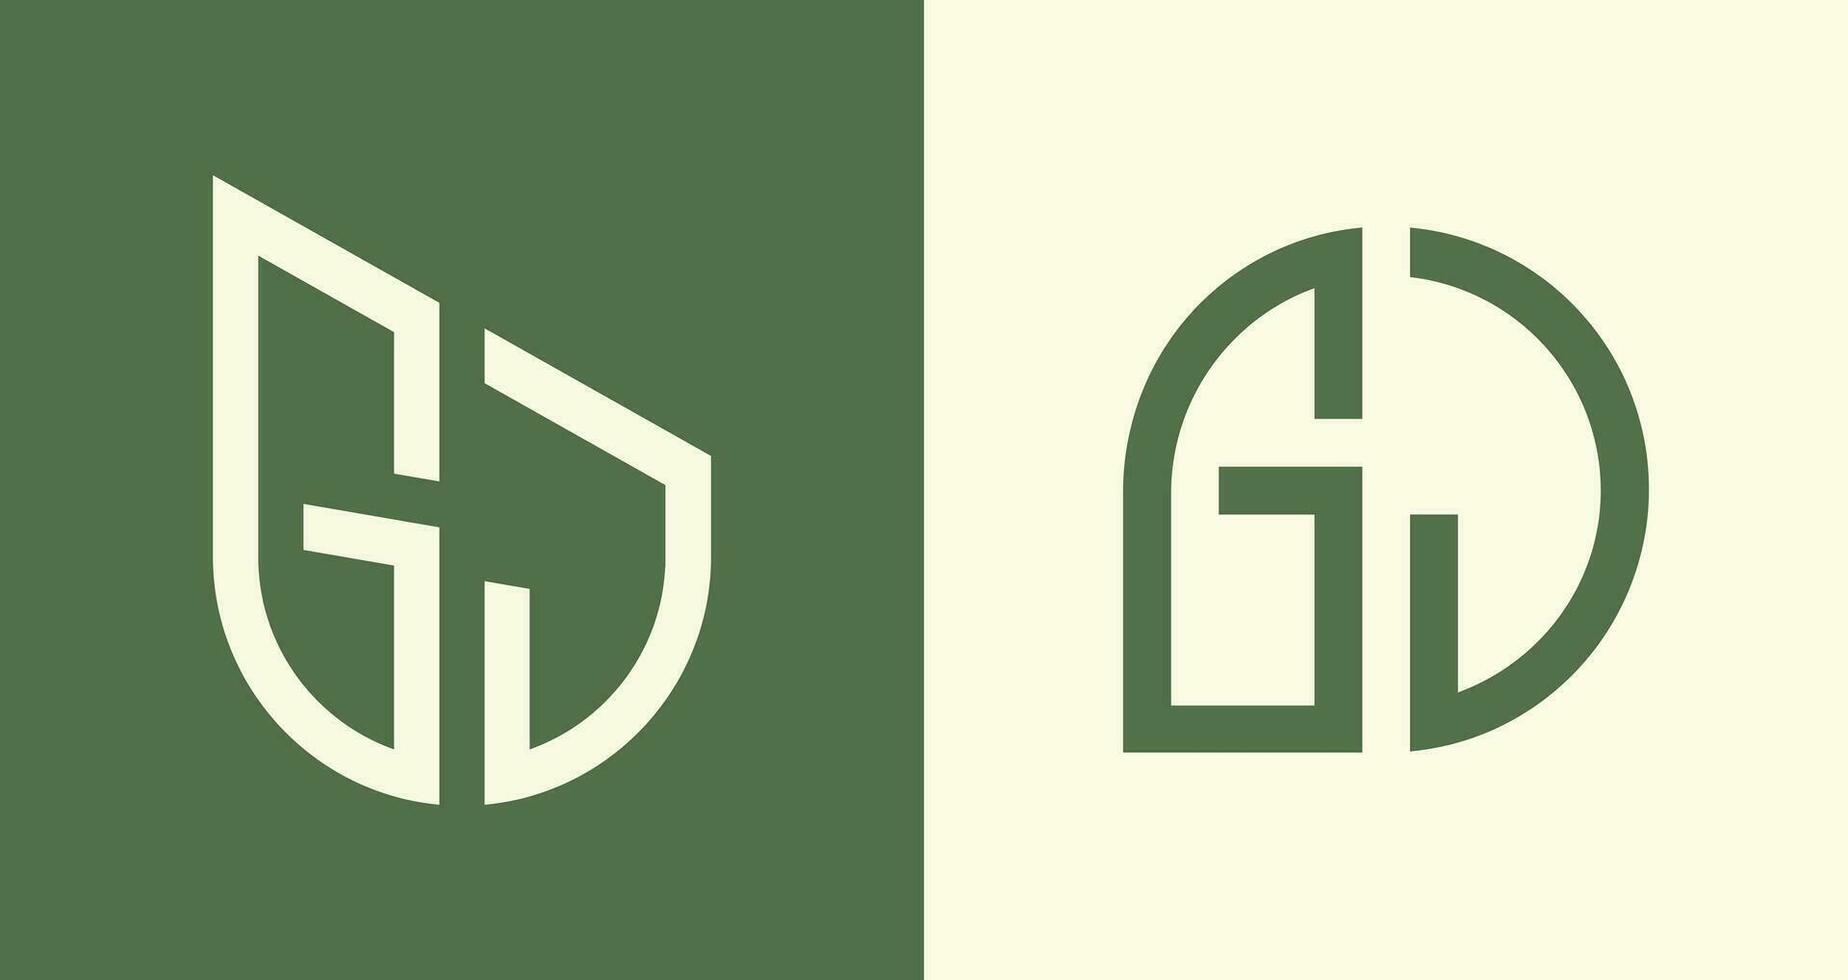 creativo sencillo inicial letras gj logo diseños manojo. vector